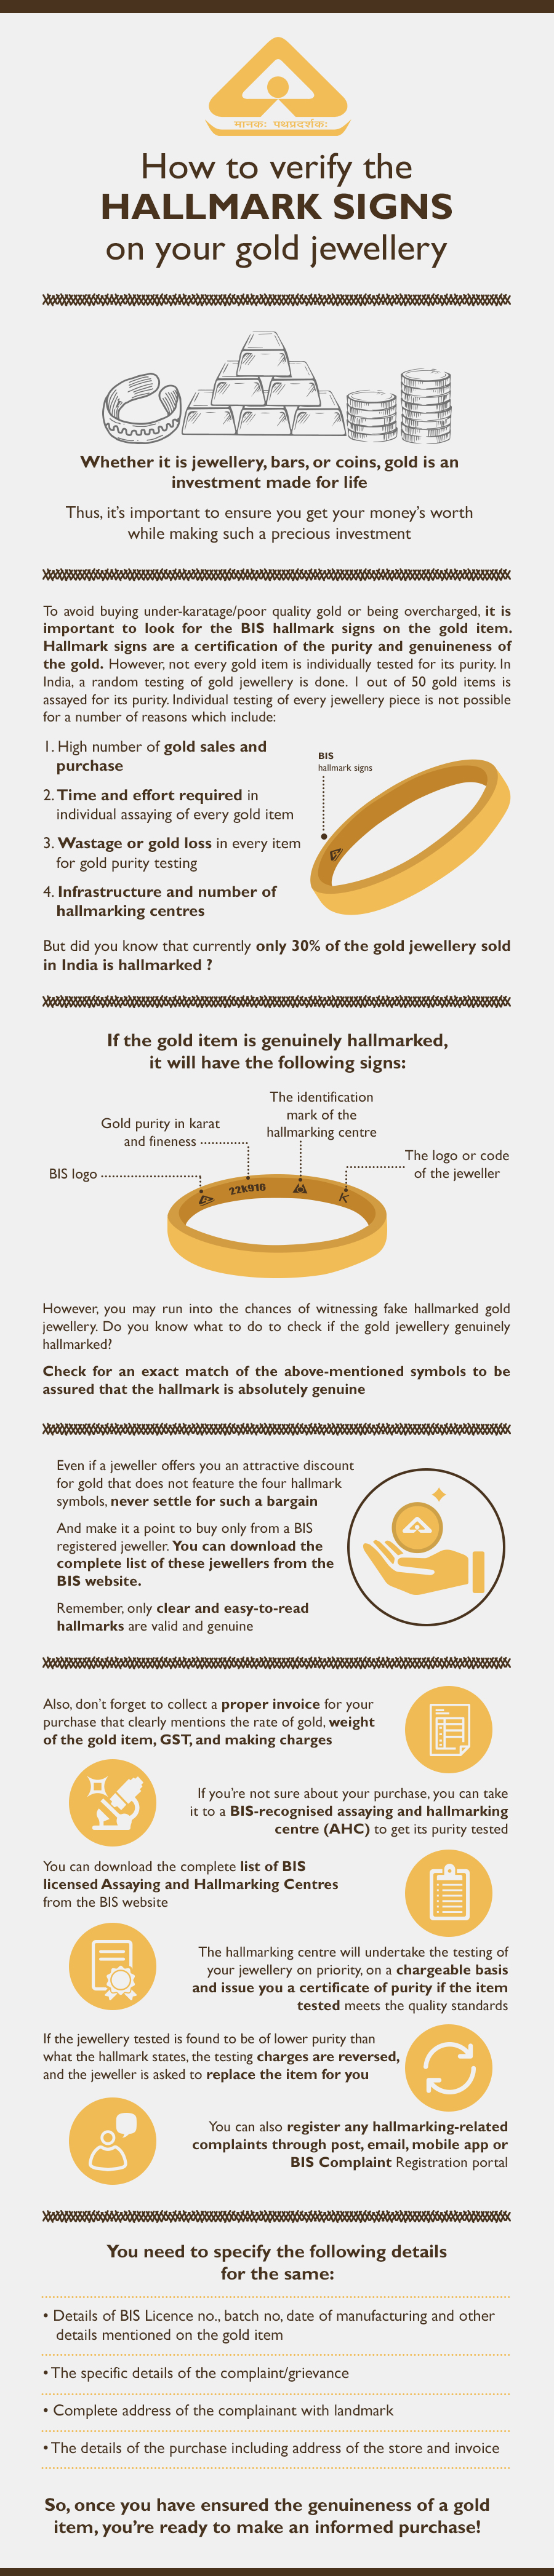 Hallmark signs on gold jewellery